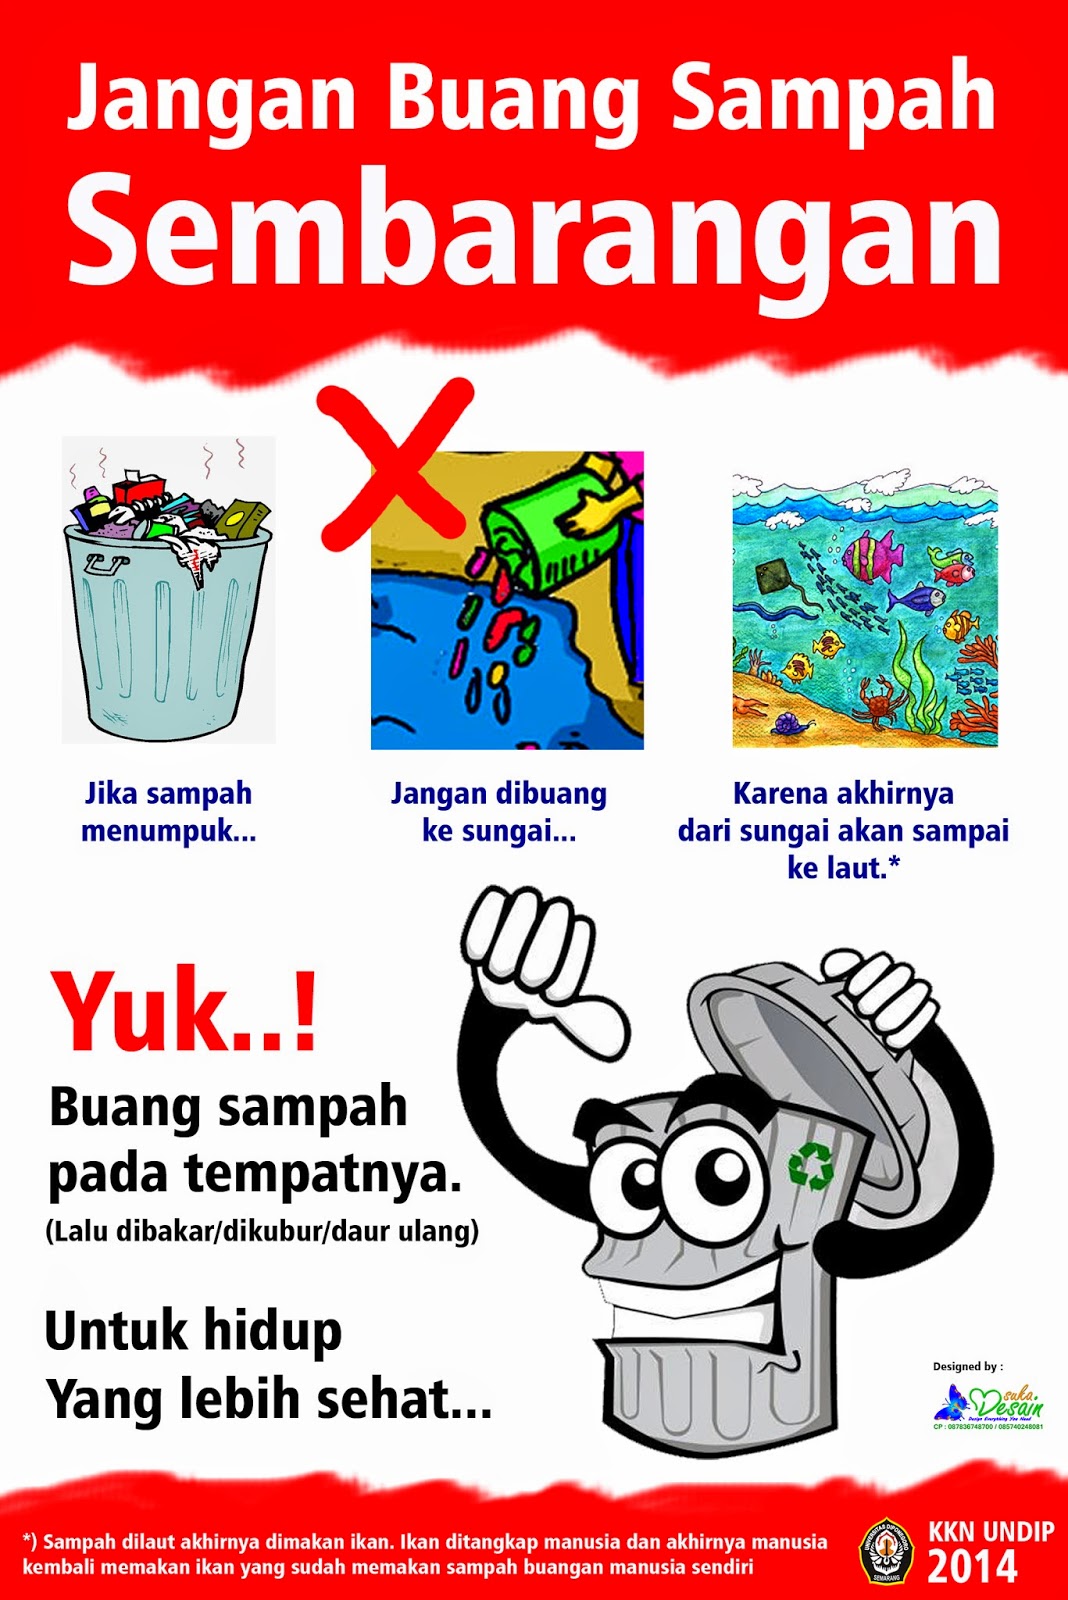  Poster  Jangan Buang Sampah  Sembarangan SUKADESAIN